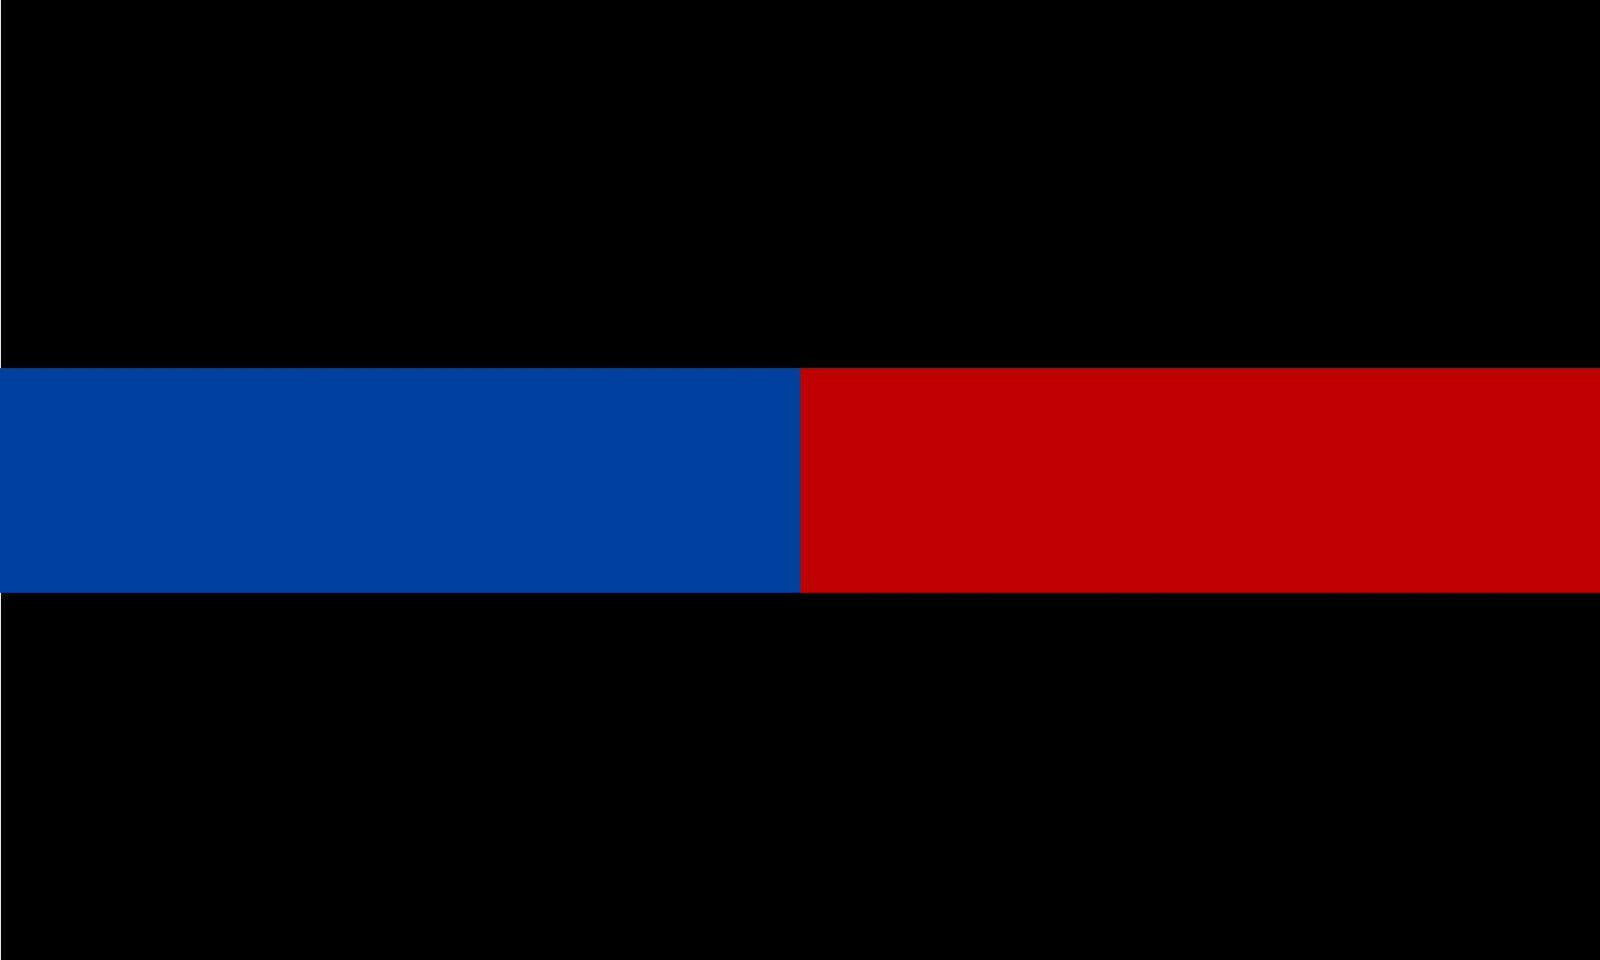 Thin Blue Line Half Blue Half Red Exterior REFLECTIVE window Decal 3"x5" - Powercall Sirens LLC